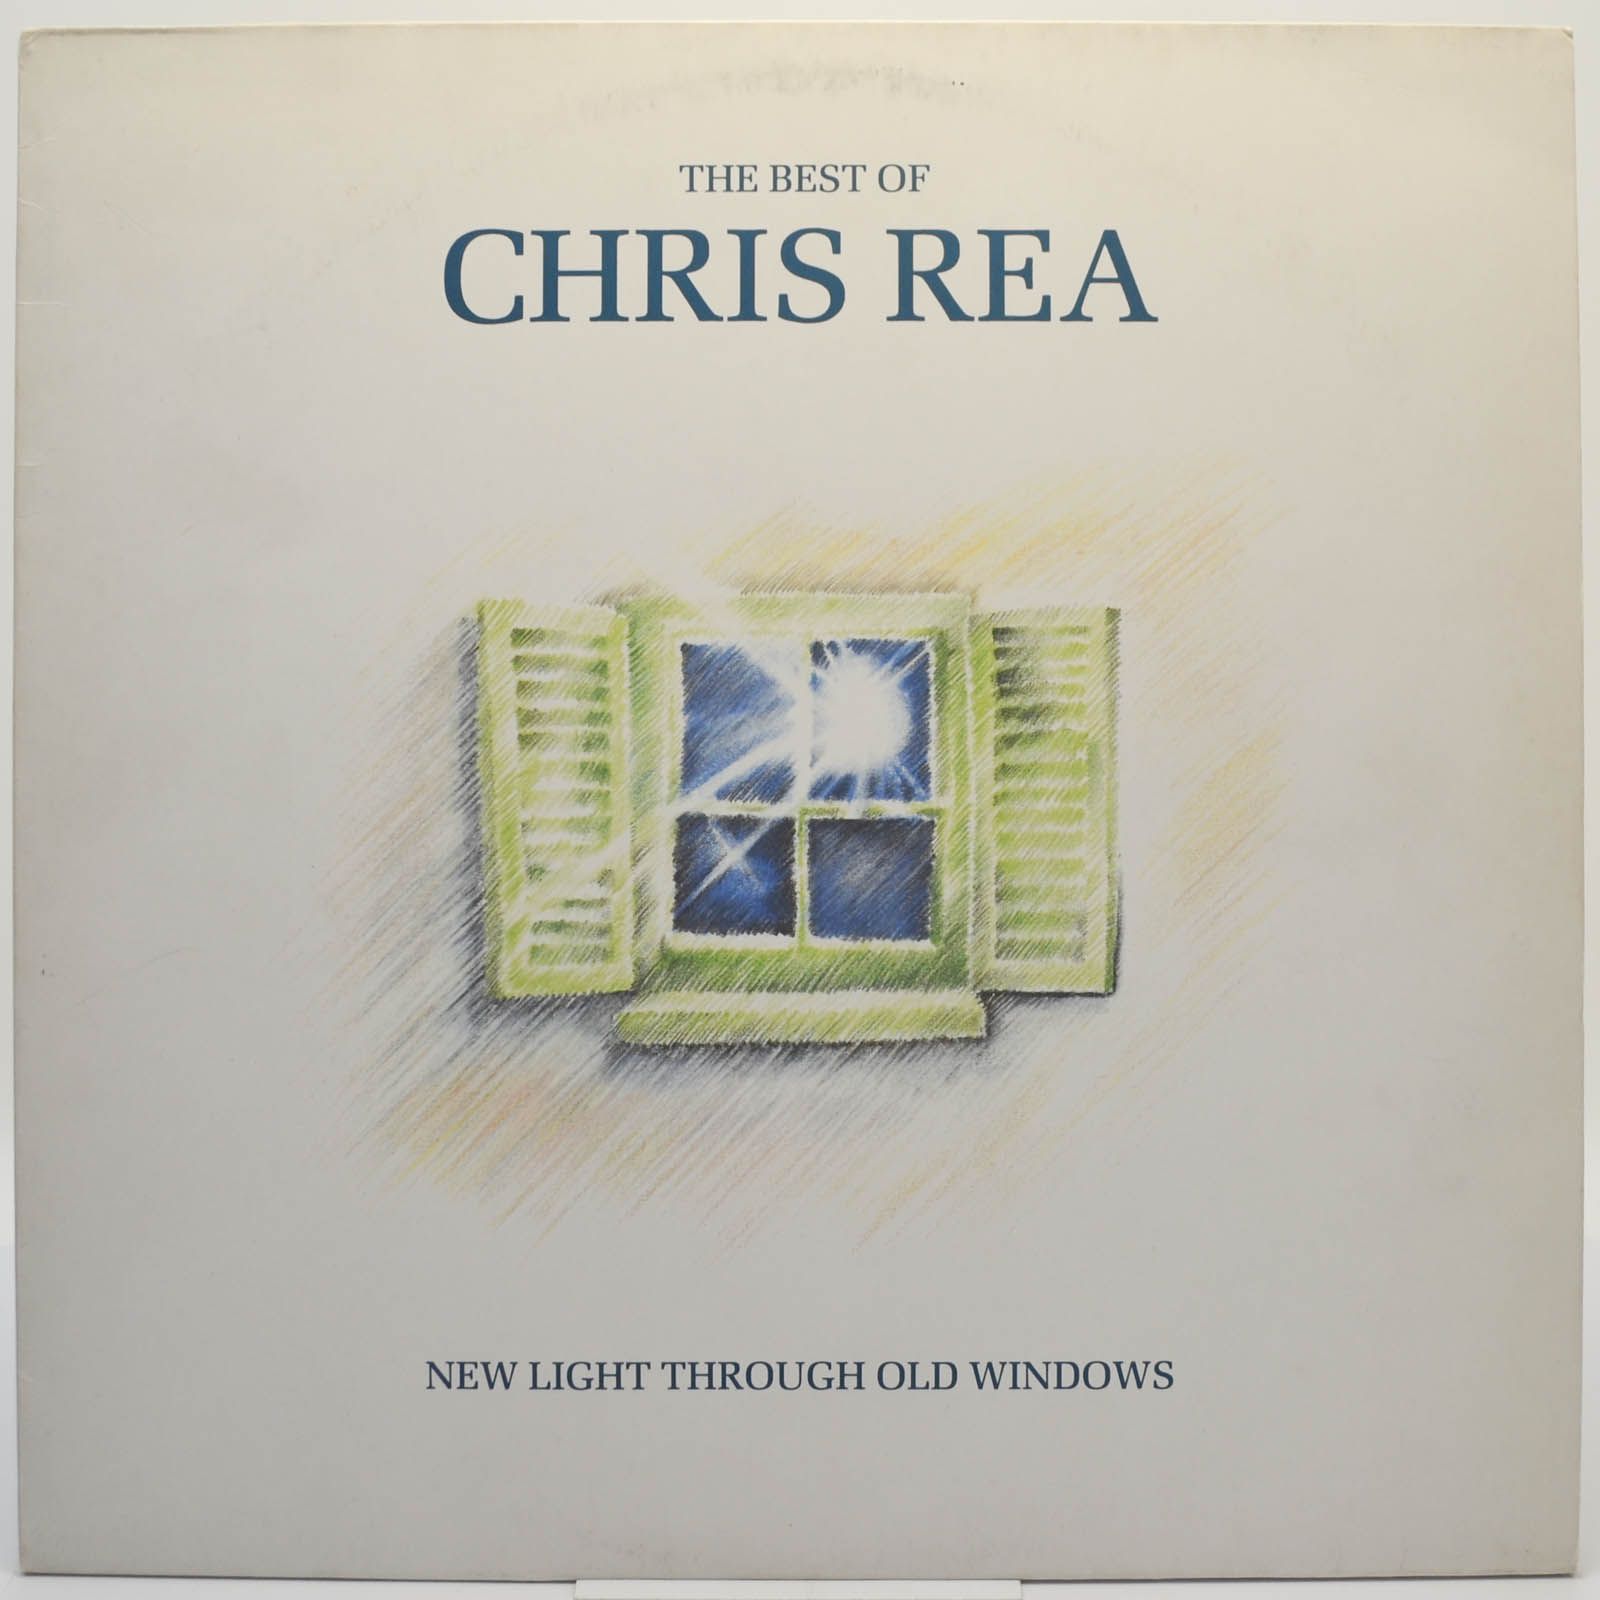 Chris Rea — New Light Through Old Windows (The Best Of Chris Rea), 1988